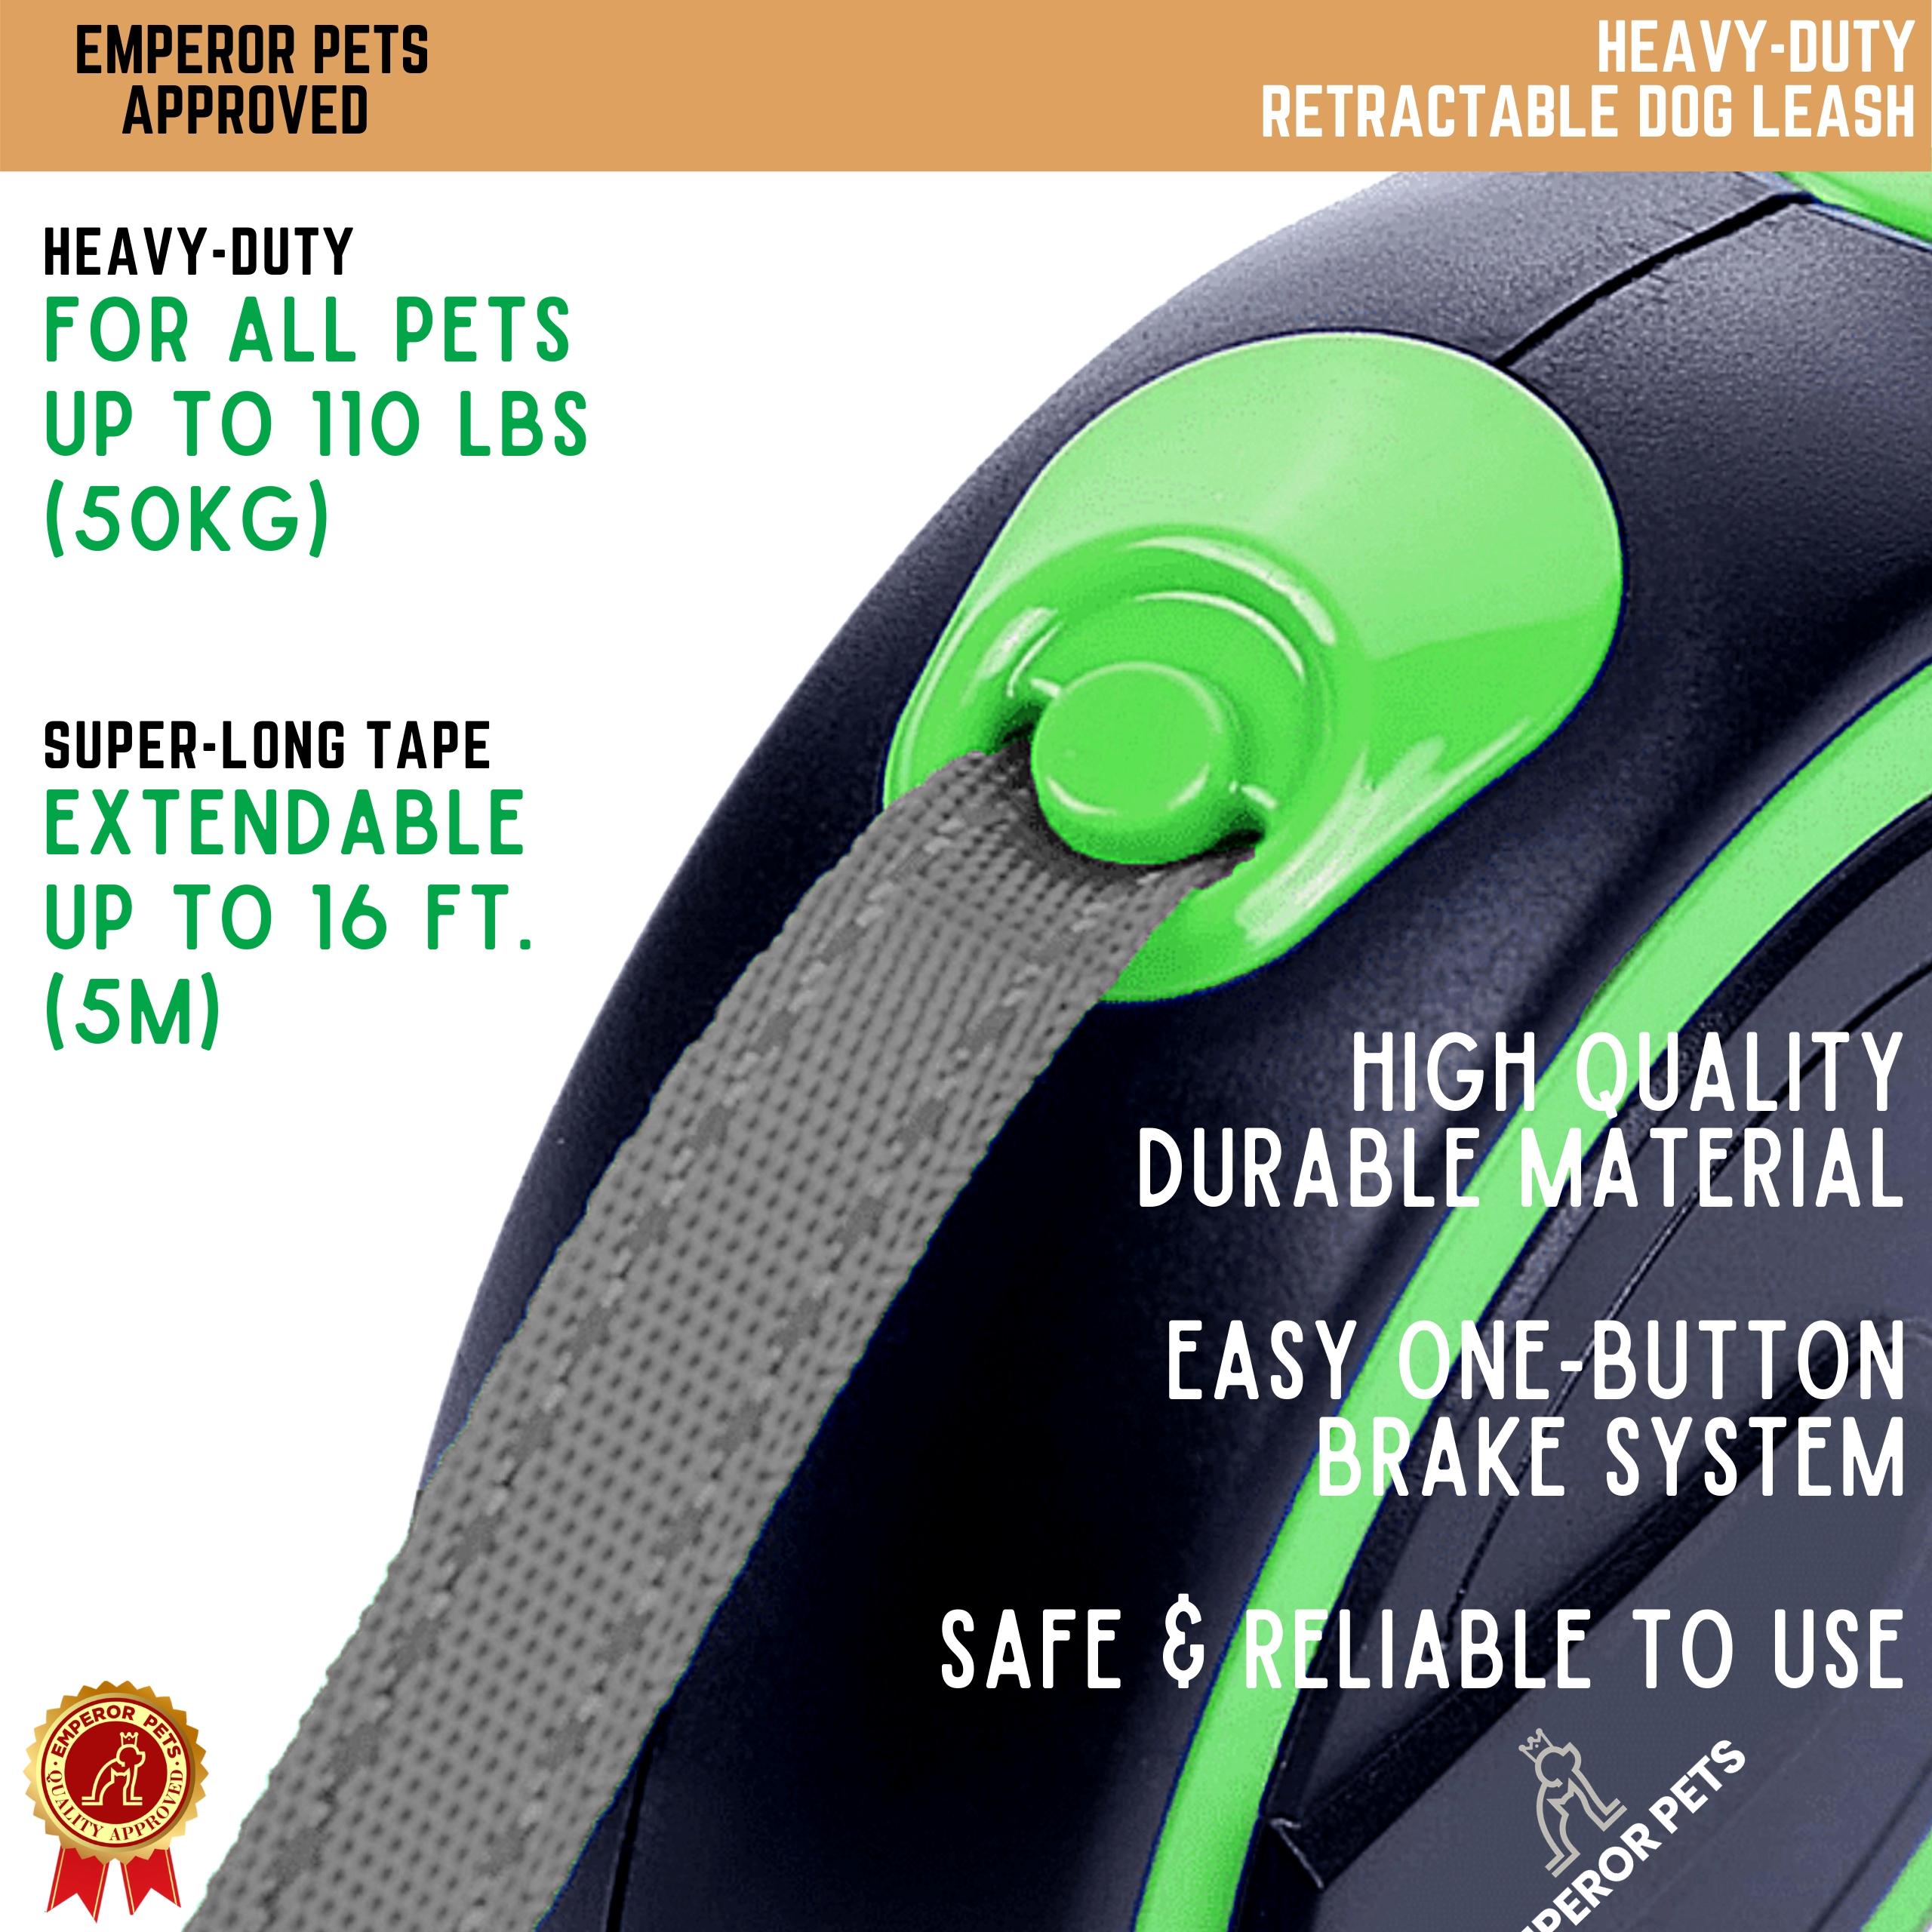 Emperor Pets Retractable Pet Leash Tape Length 16ft 5m Green Color, Durable Retractable Dog Leash - Image 2 Highlight